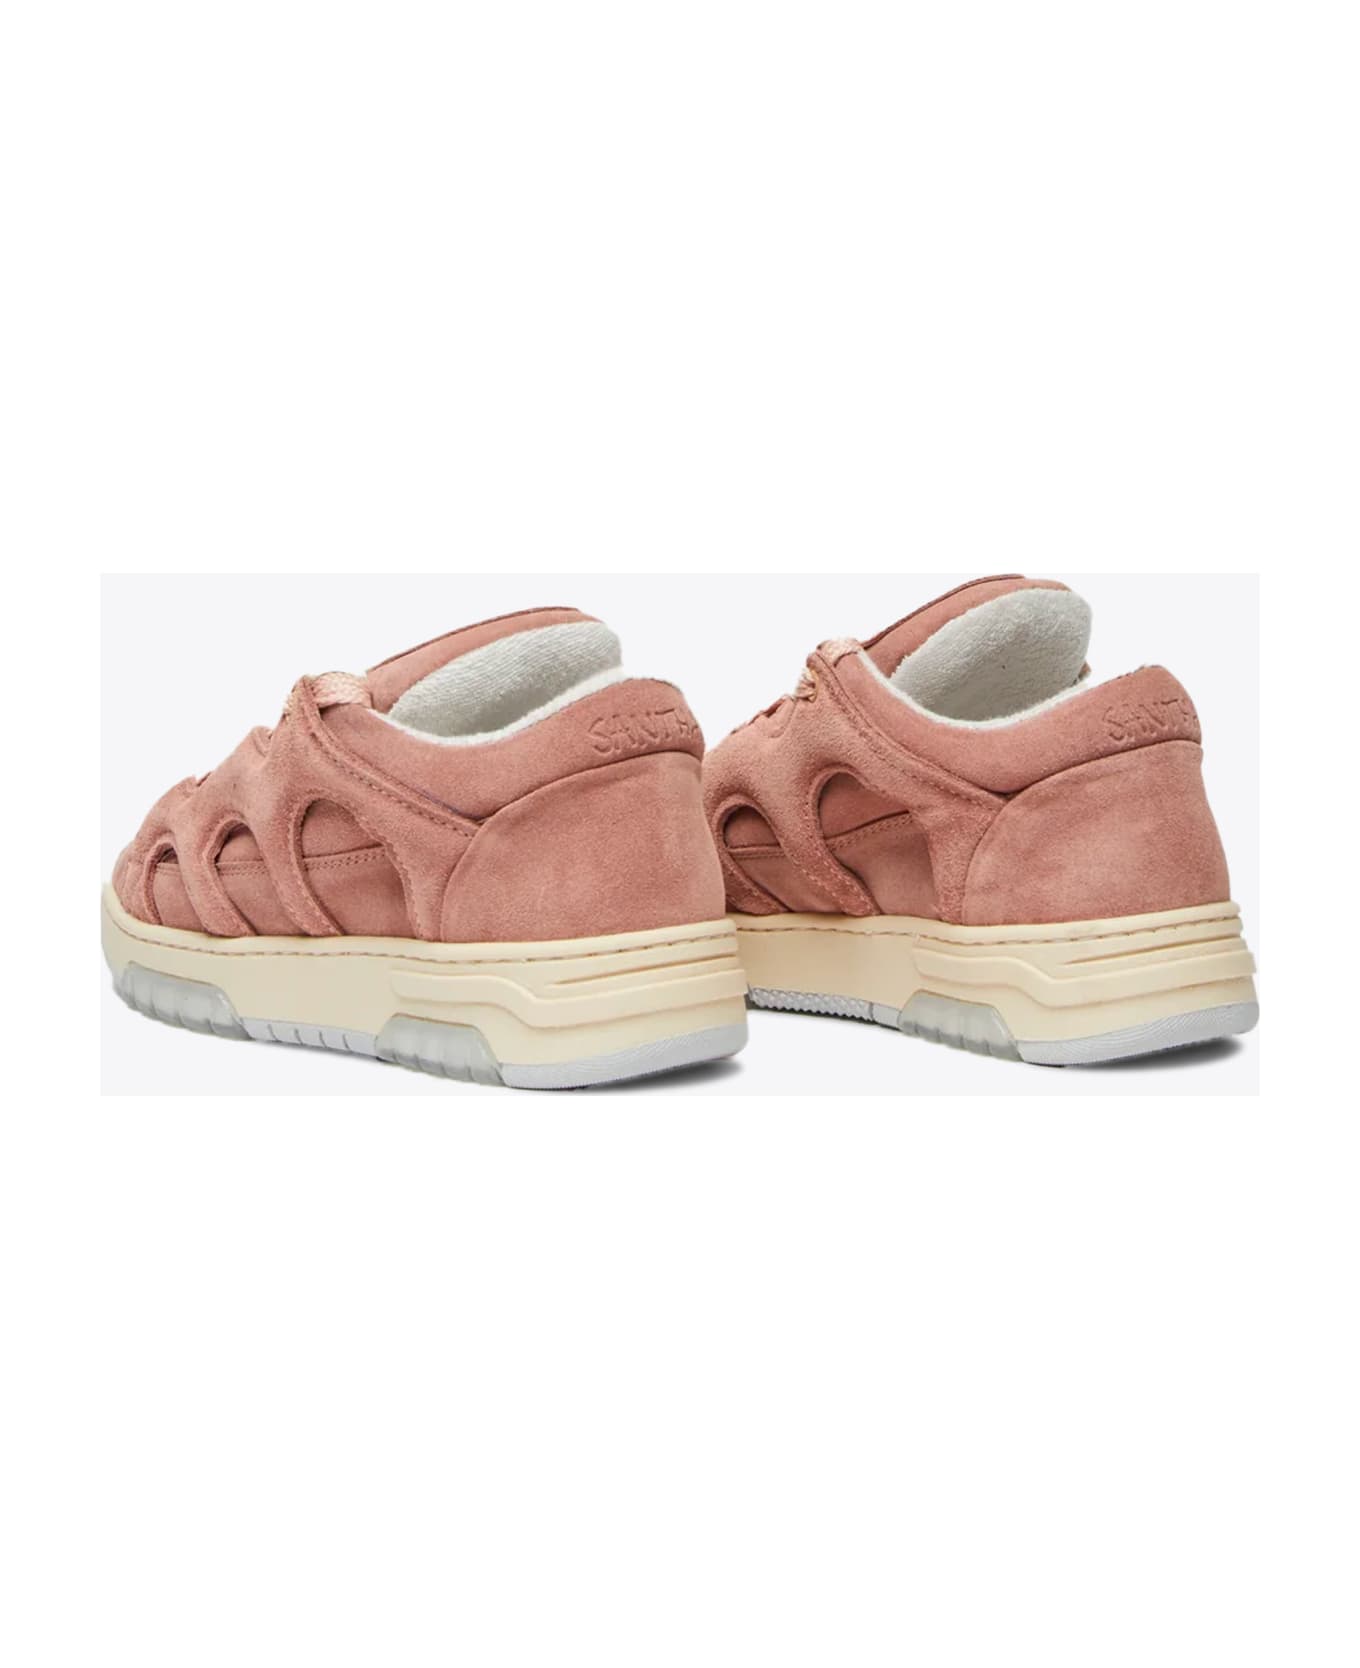 Paura Santha 1 Suede Antique Pink Suede Low Sneaker - Rosa